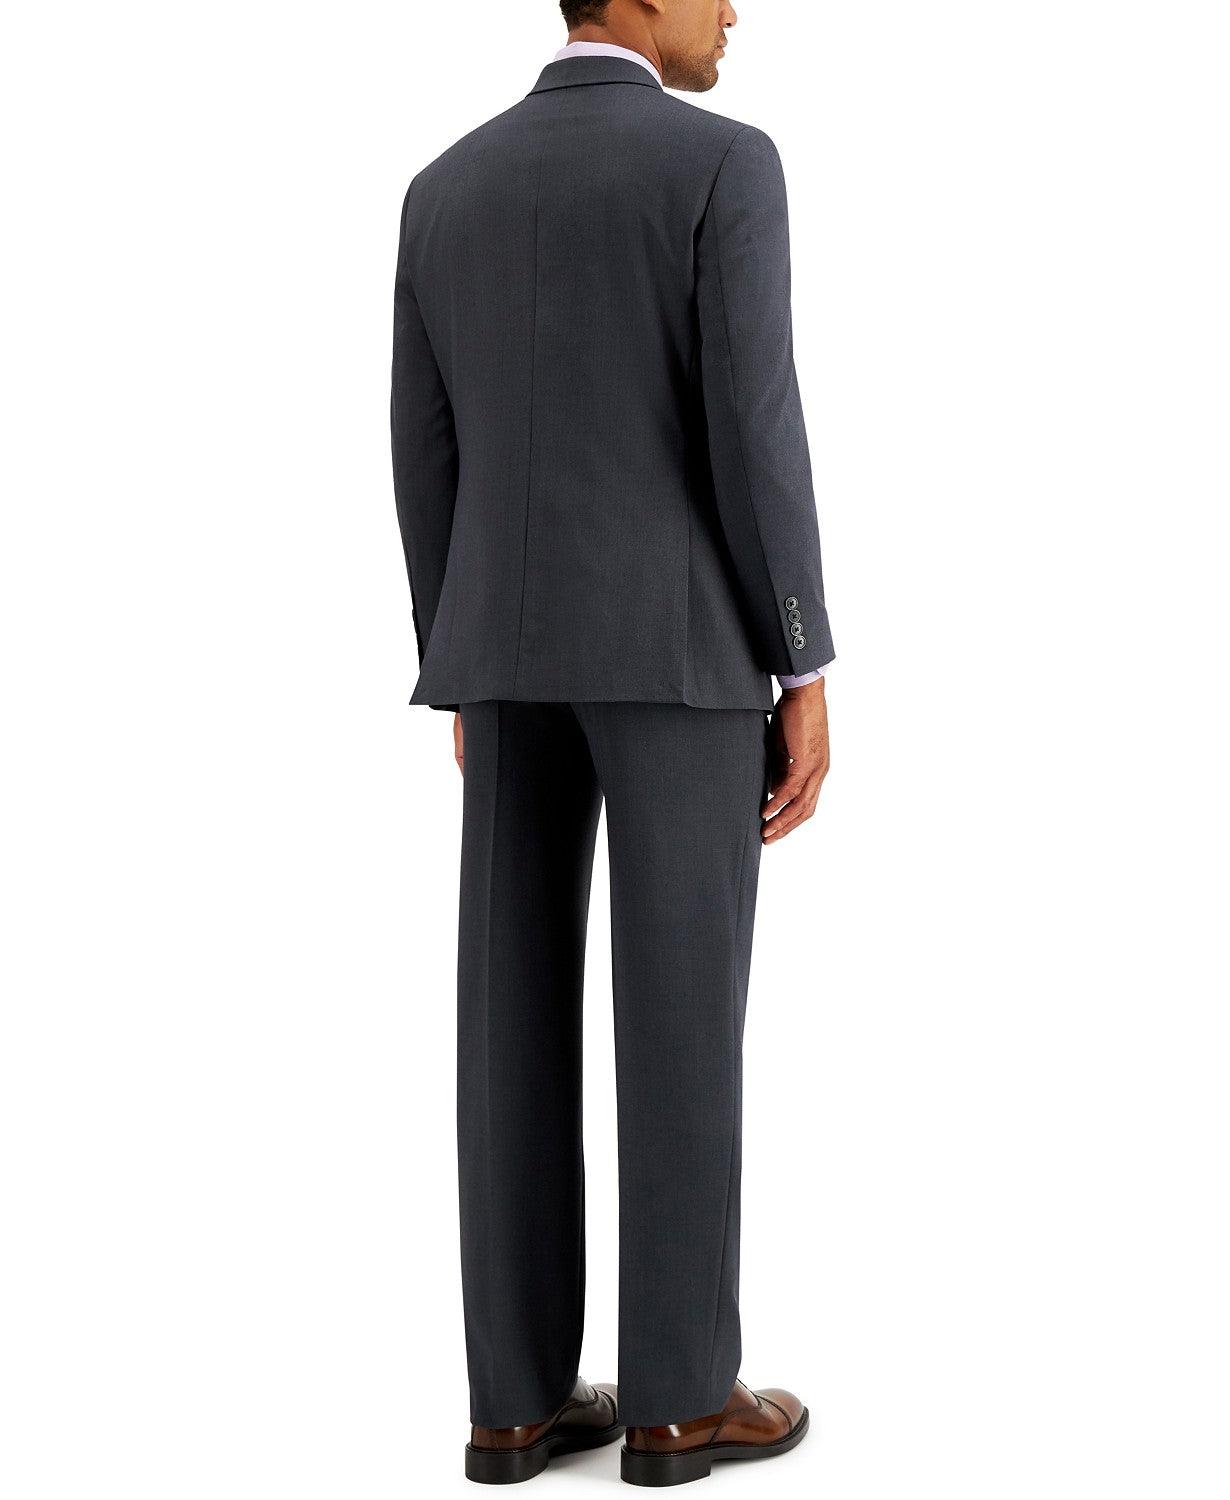 Nautica Men's Modern-Fit Bi-Stretch Suit JACKET ONLY 38R Carbon Grey - Bristol Apparel Co